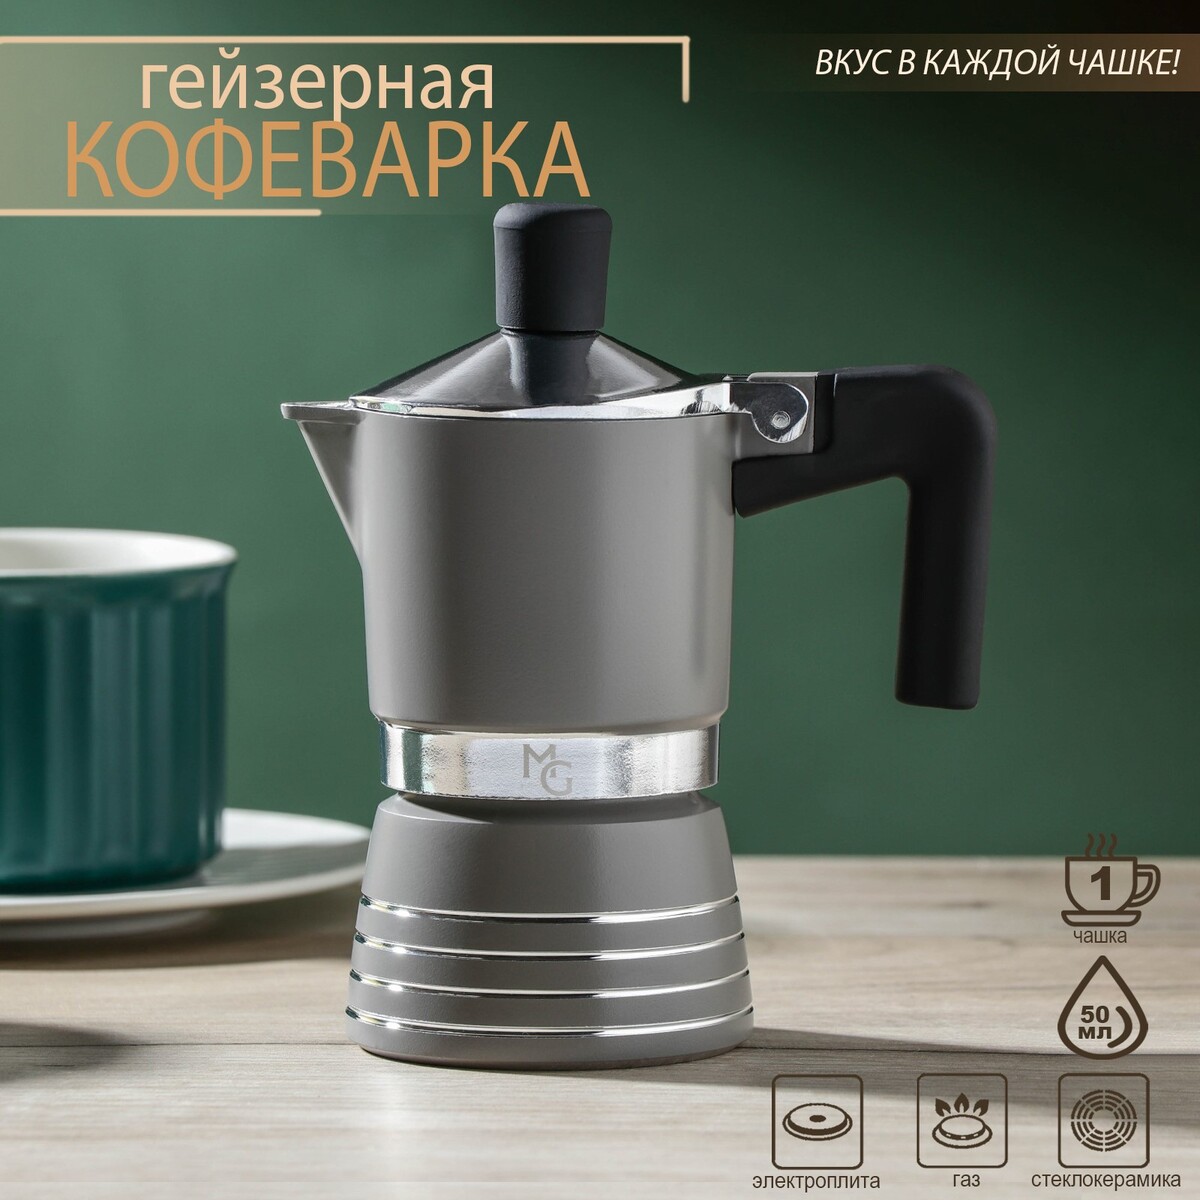 Кофеварка гейзерная magistro moka, на 1 чашку, 50 мл кофеварка гейзерная доляна azure на 1 чашку 50 мл